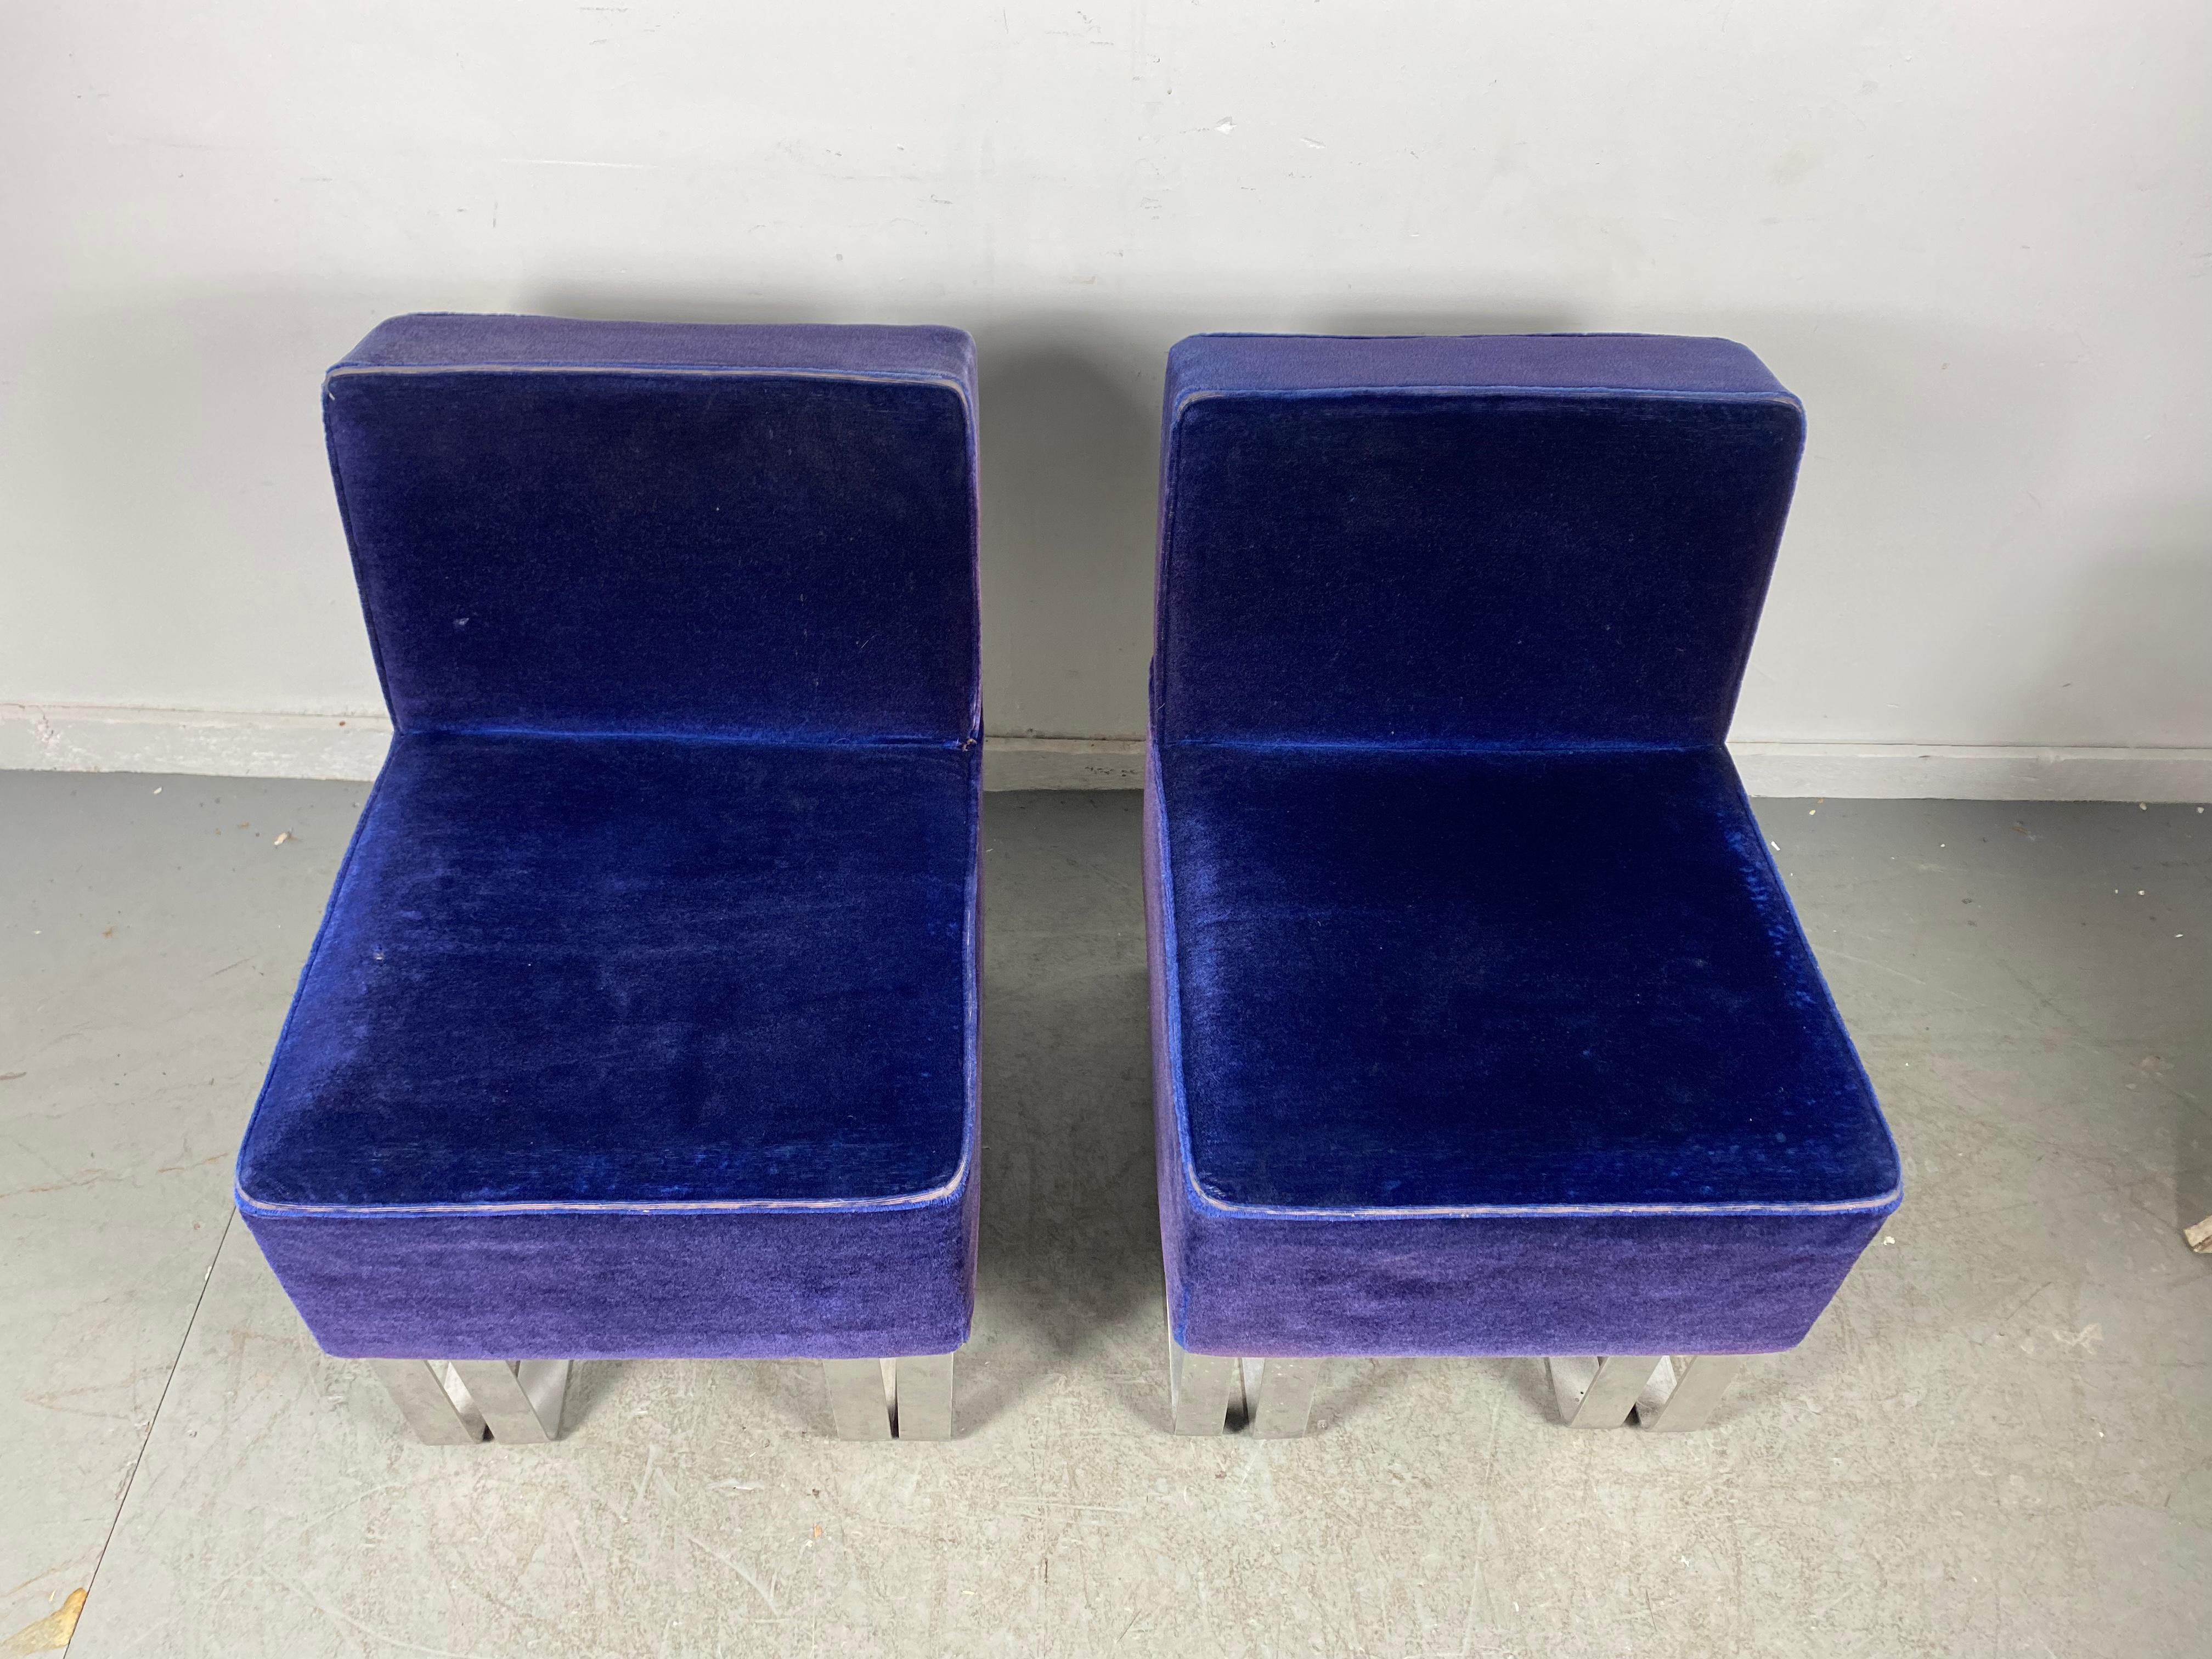 Rare Modernist Slipper Chairs by Donald Deskey for Deskey -Vollmer For Sale 2